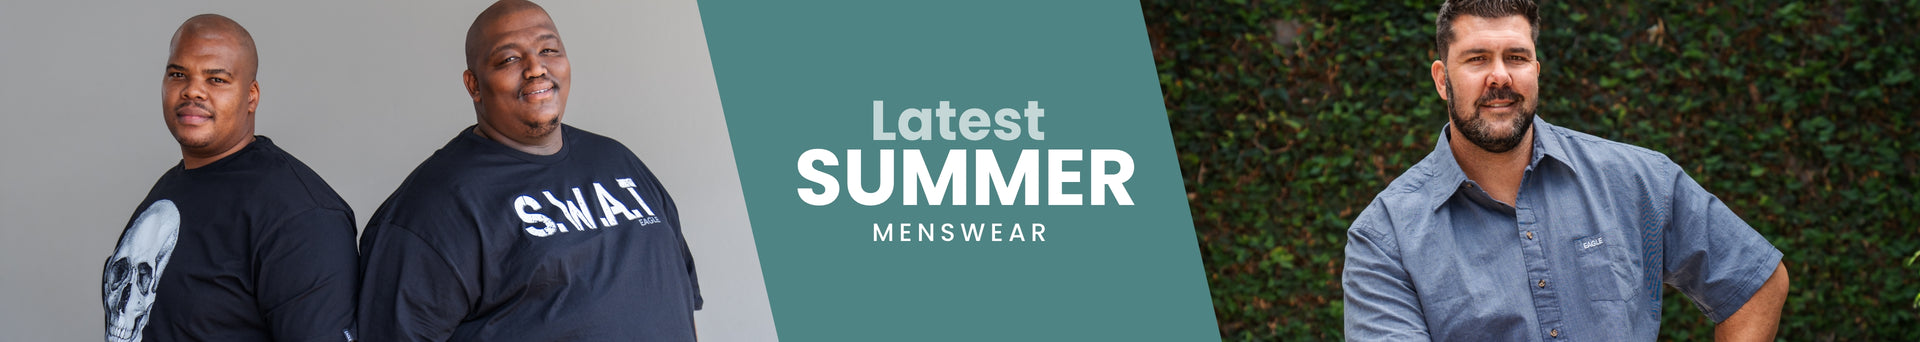 Mens Clothing Collection Banner - Desktop